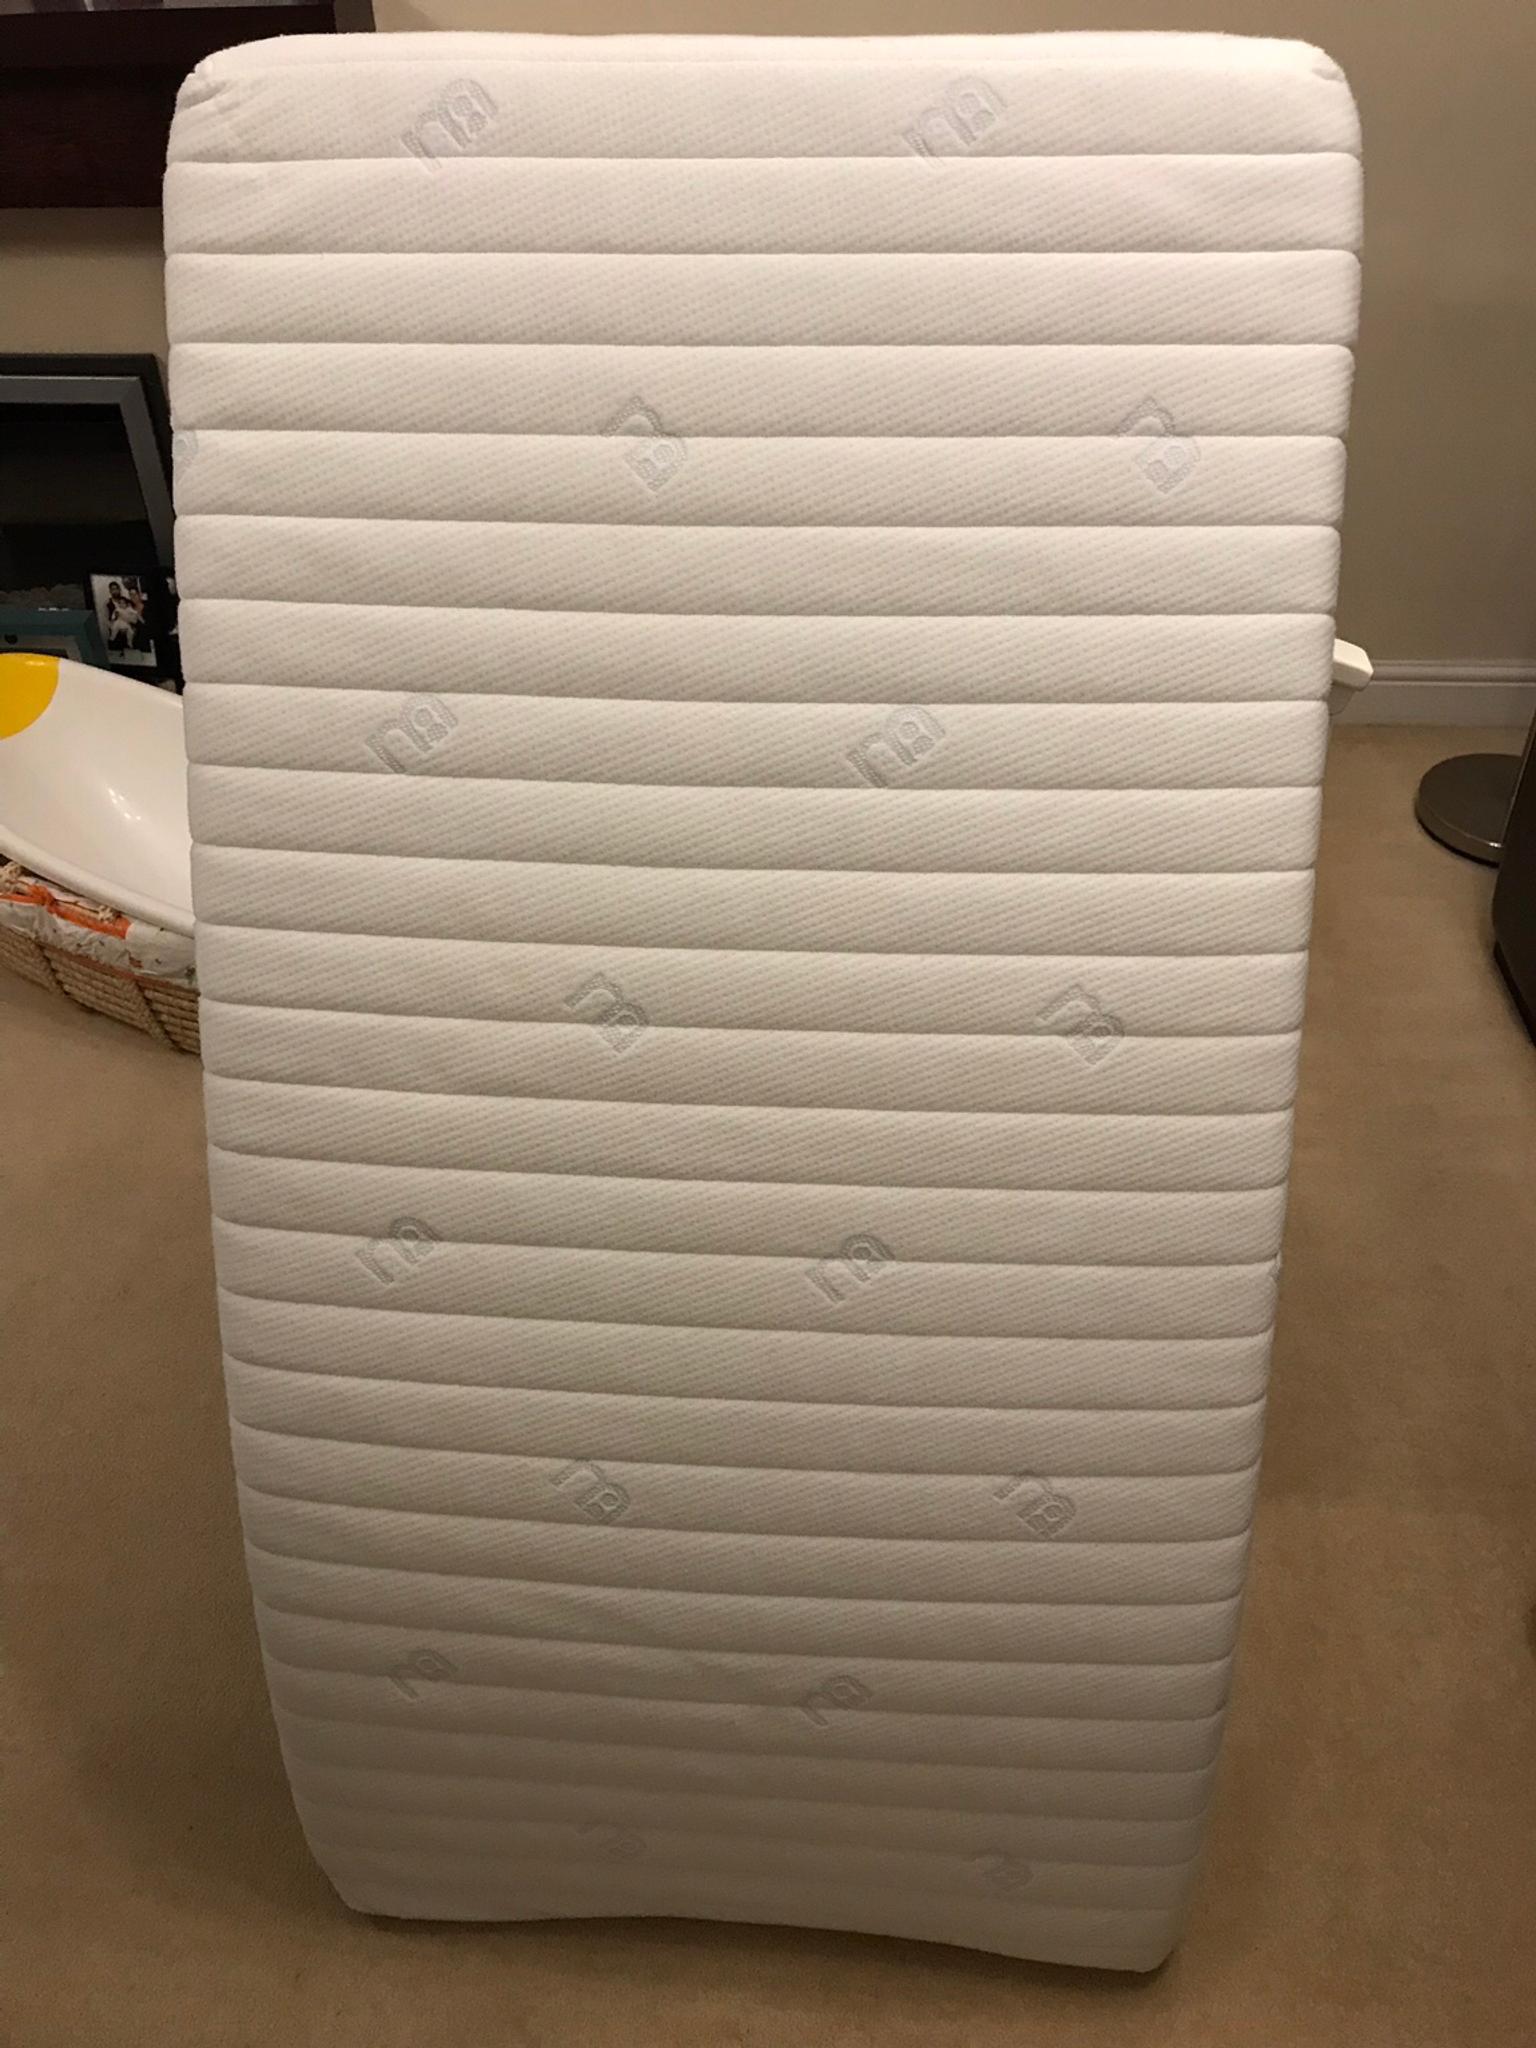 mothercare waterproof mattress